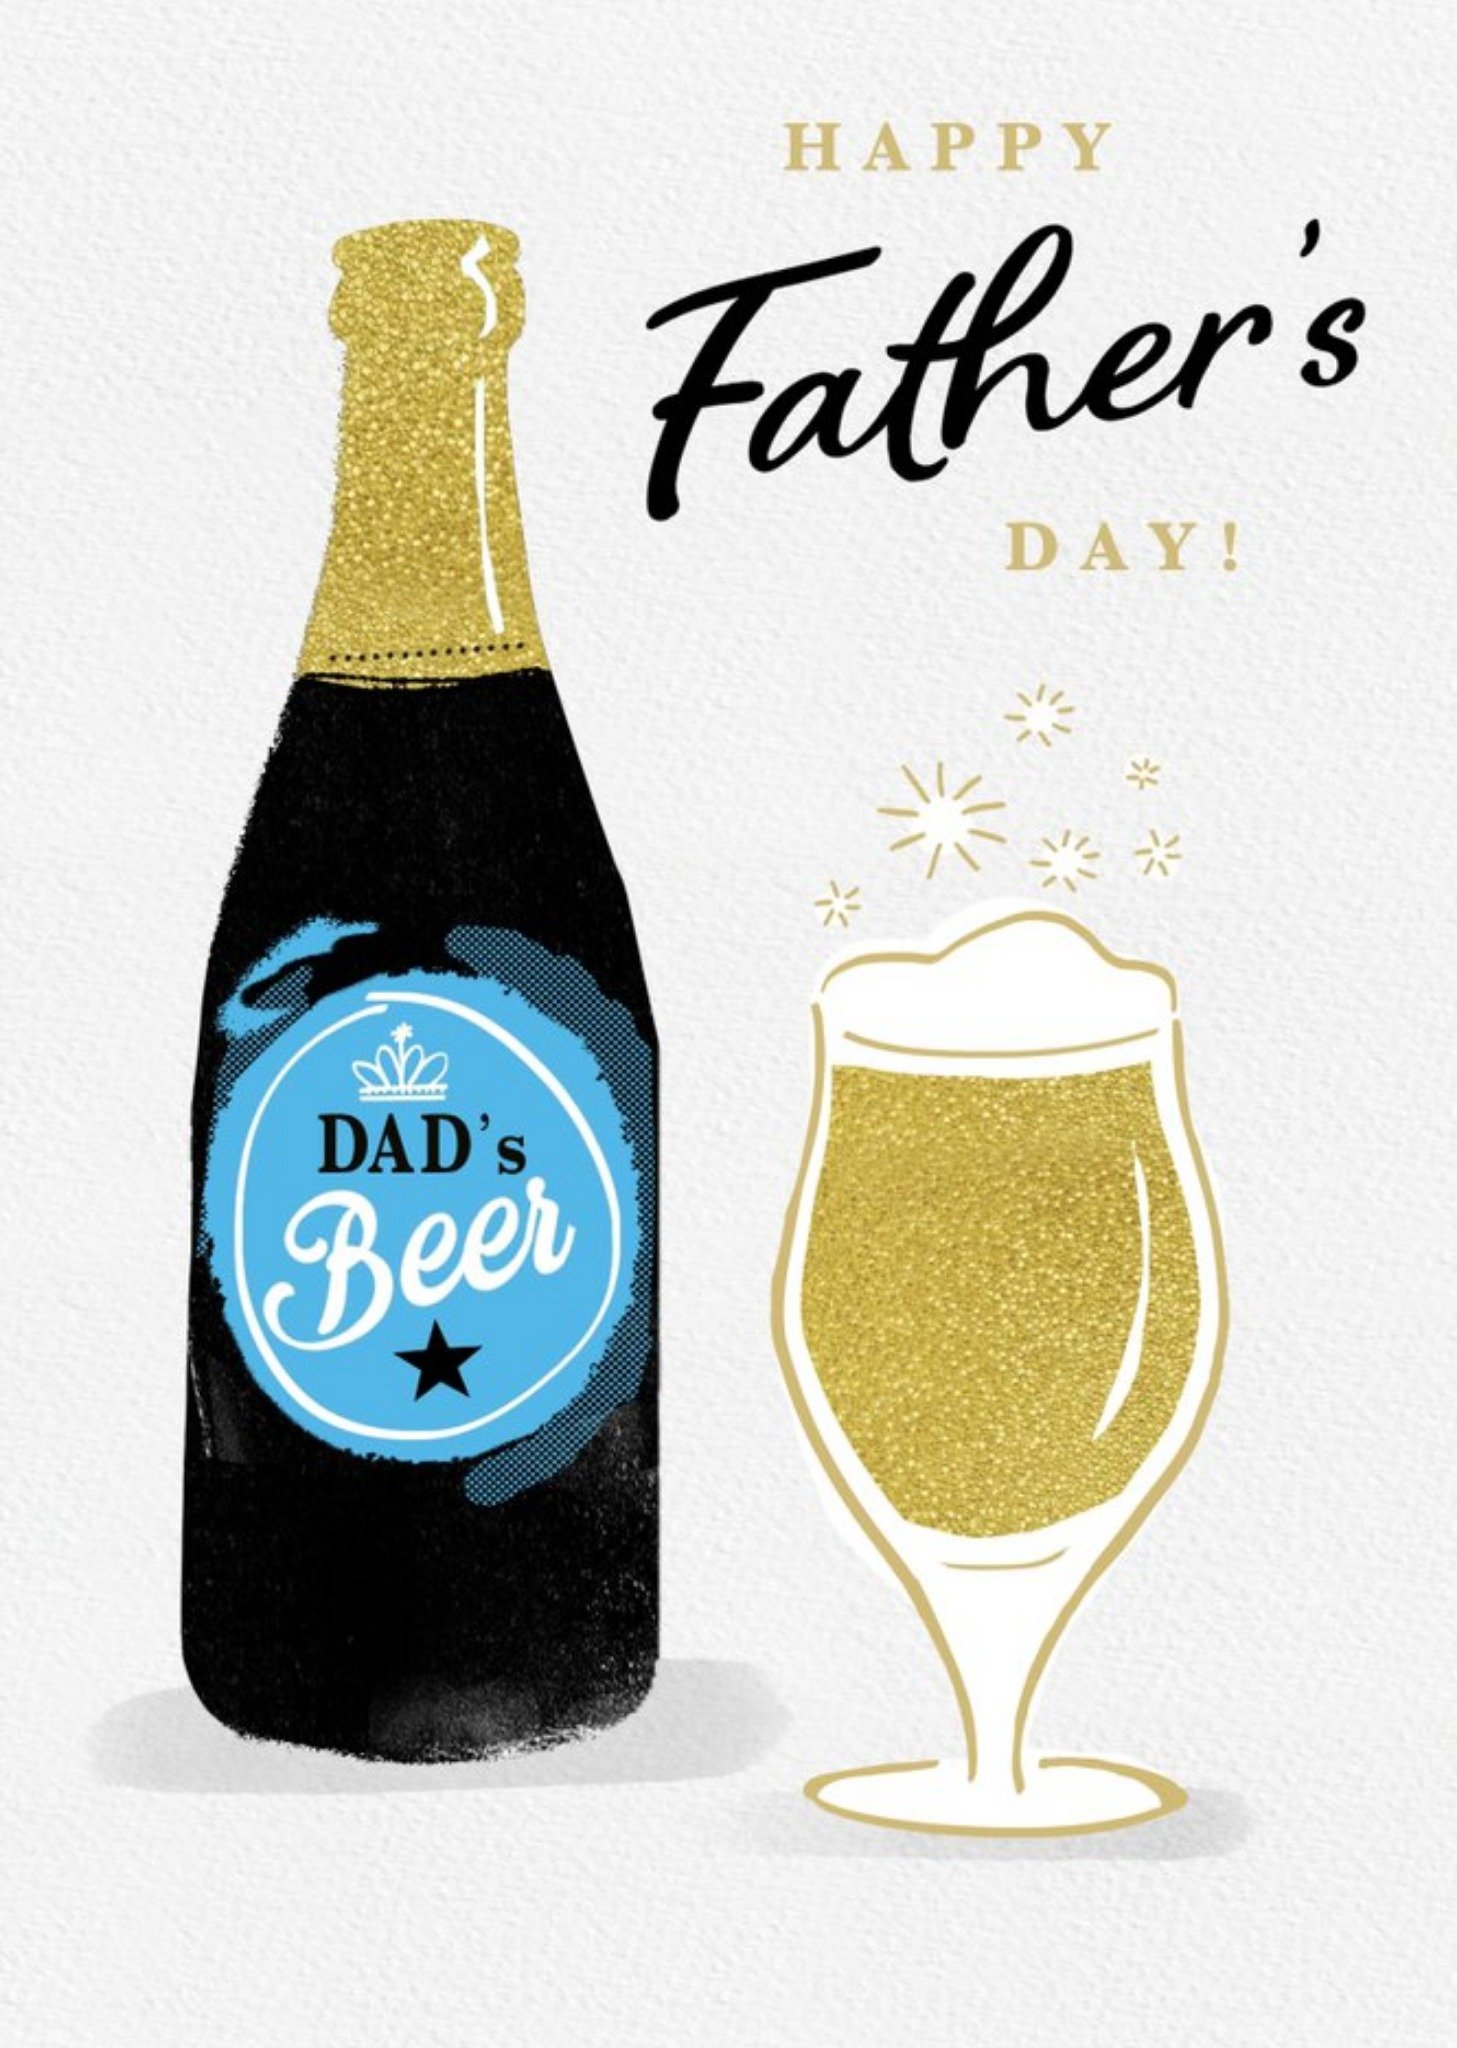 Moonpig Emma Proctor Designs Illustration Beer Drink Father's Day Card Ecard